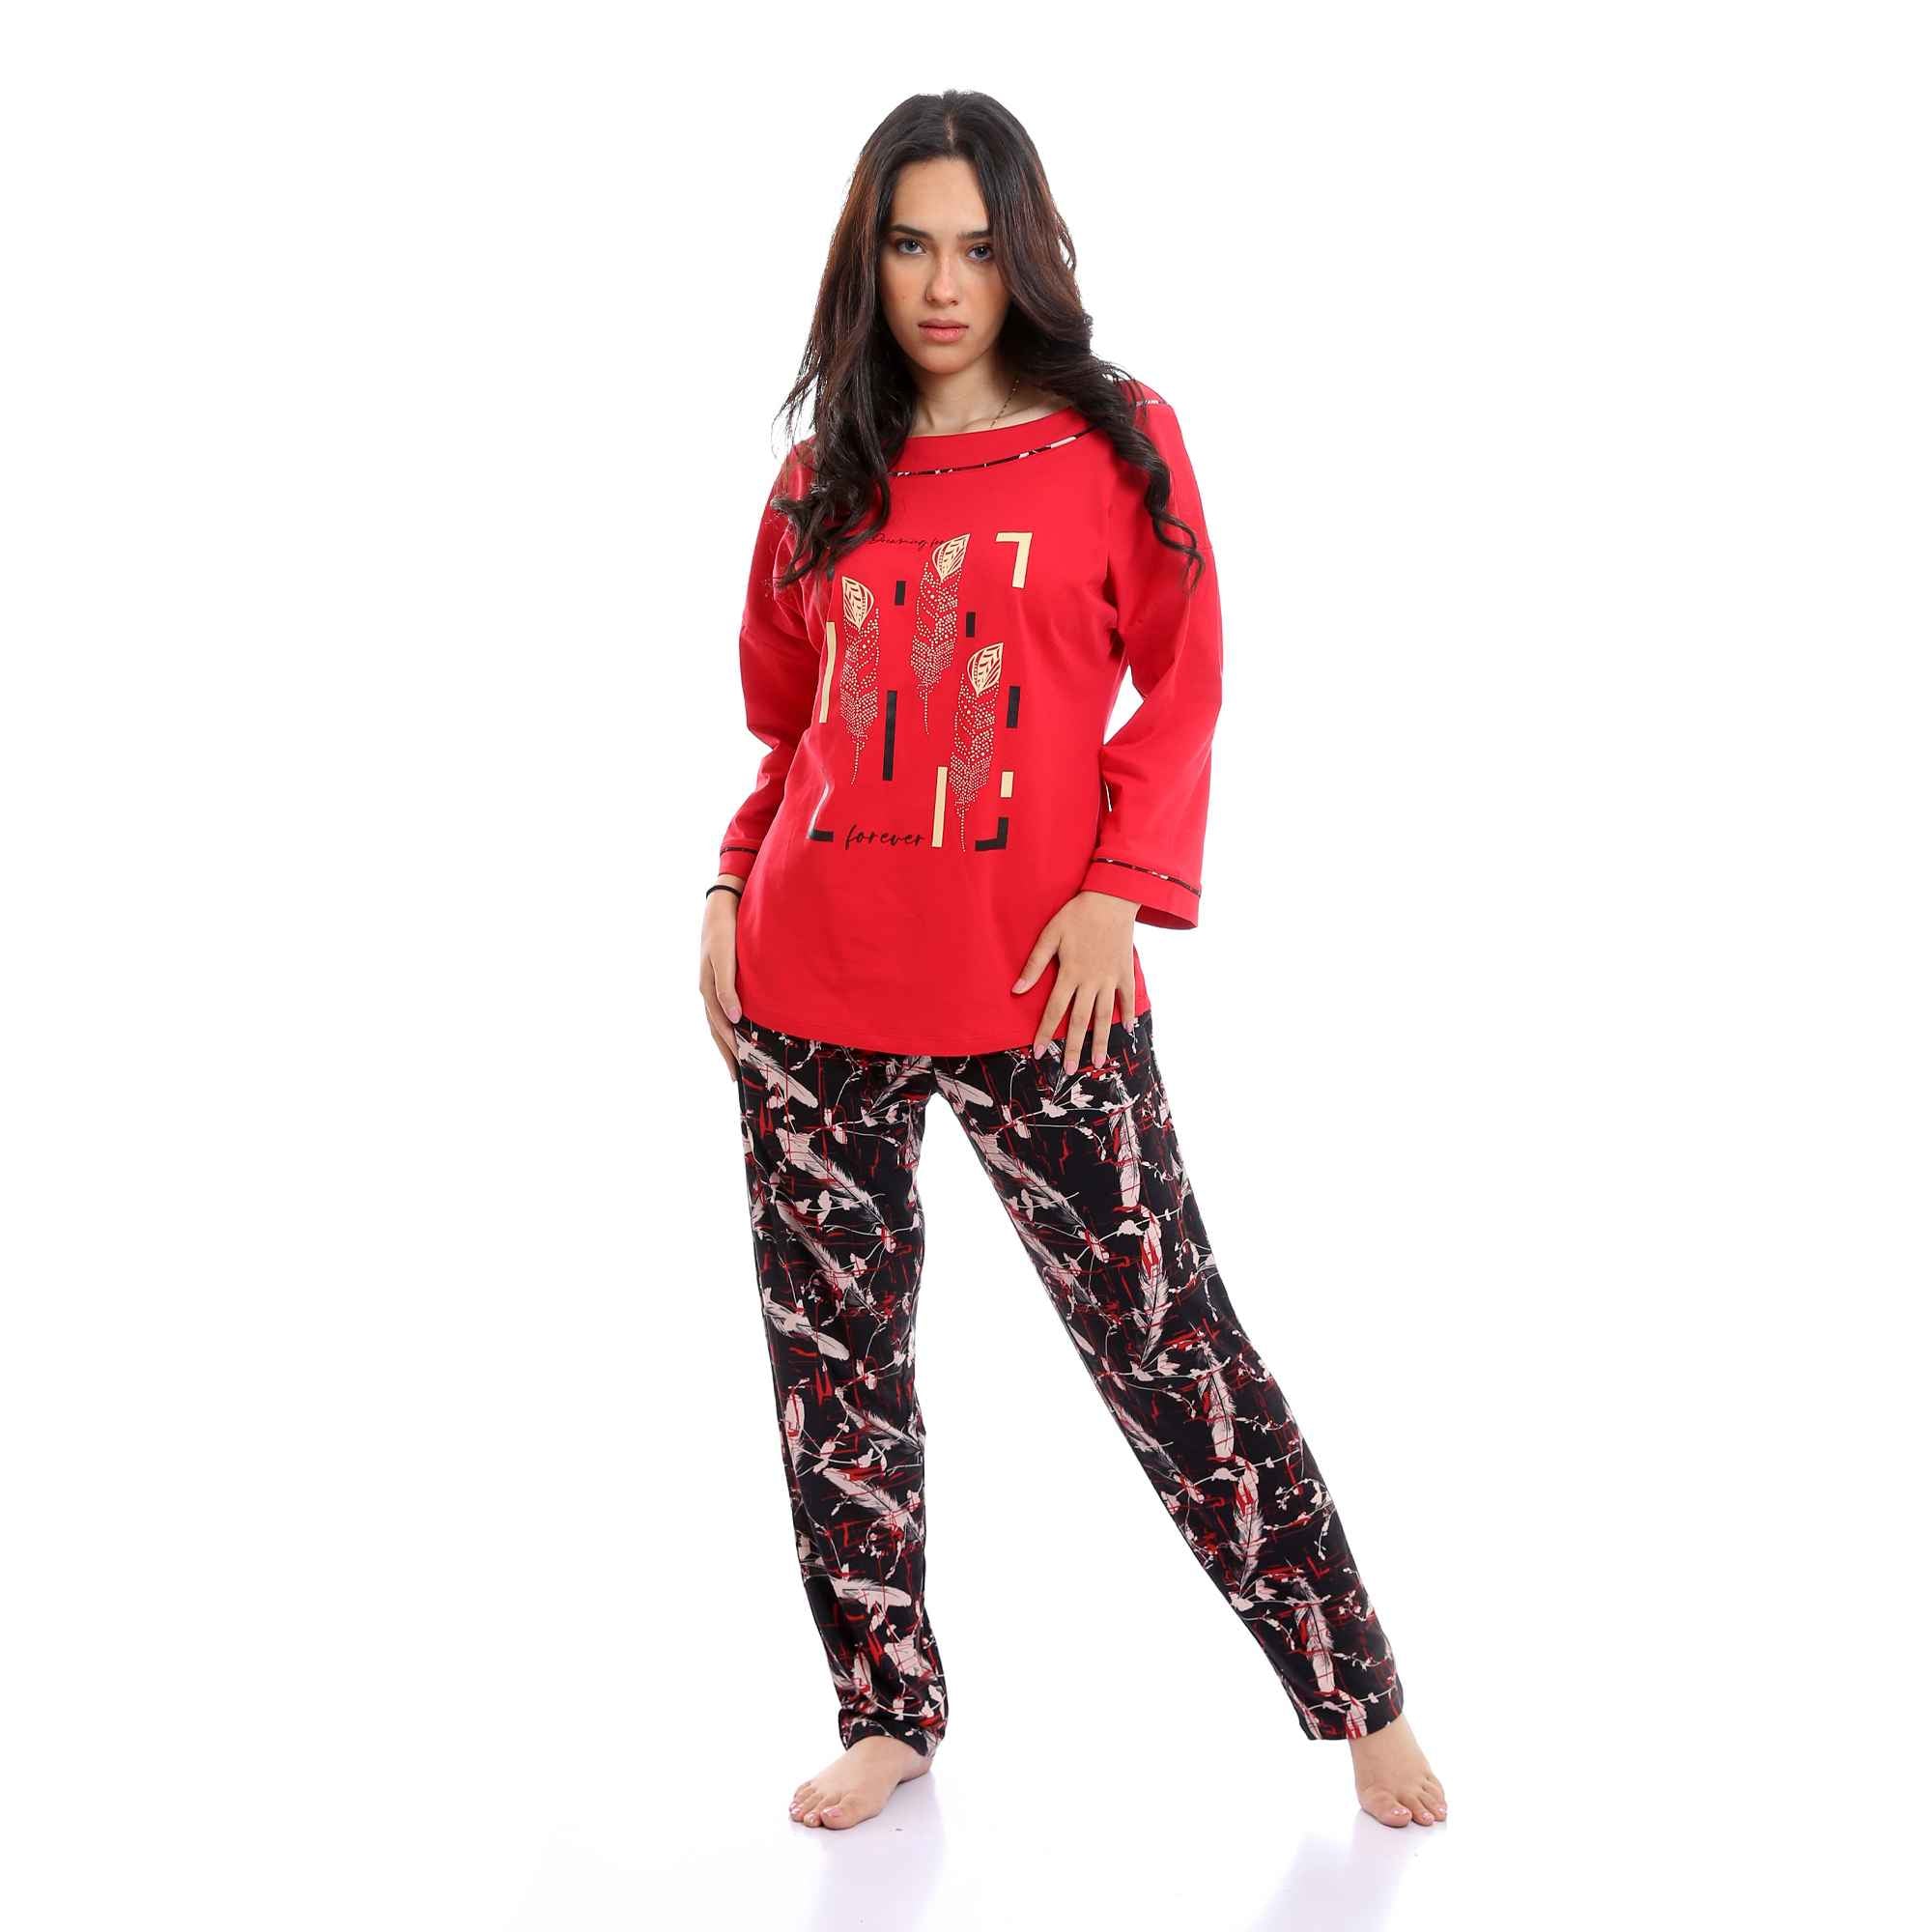 Wide Boat Neck Tee & Patterned Pants Pajama Set - Red & Black